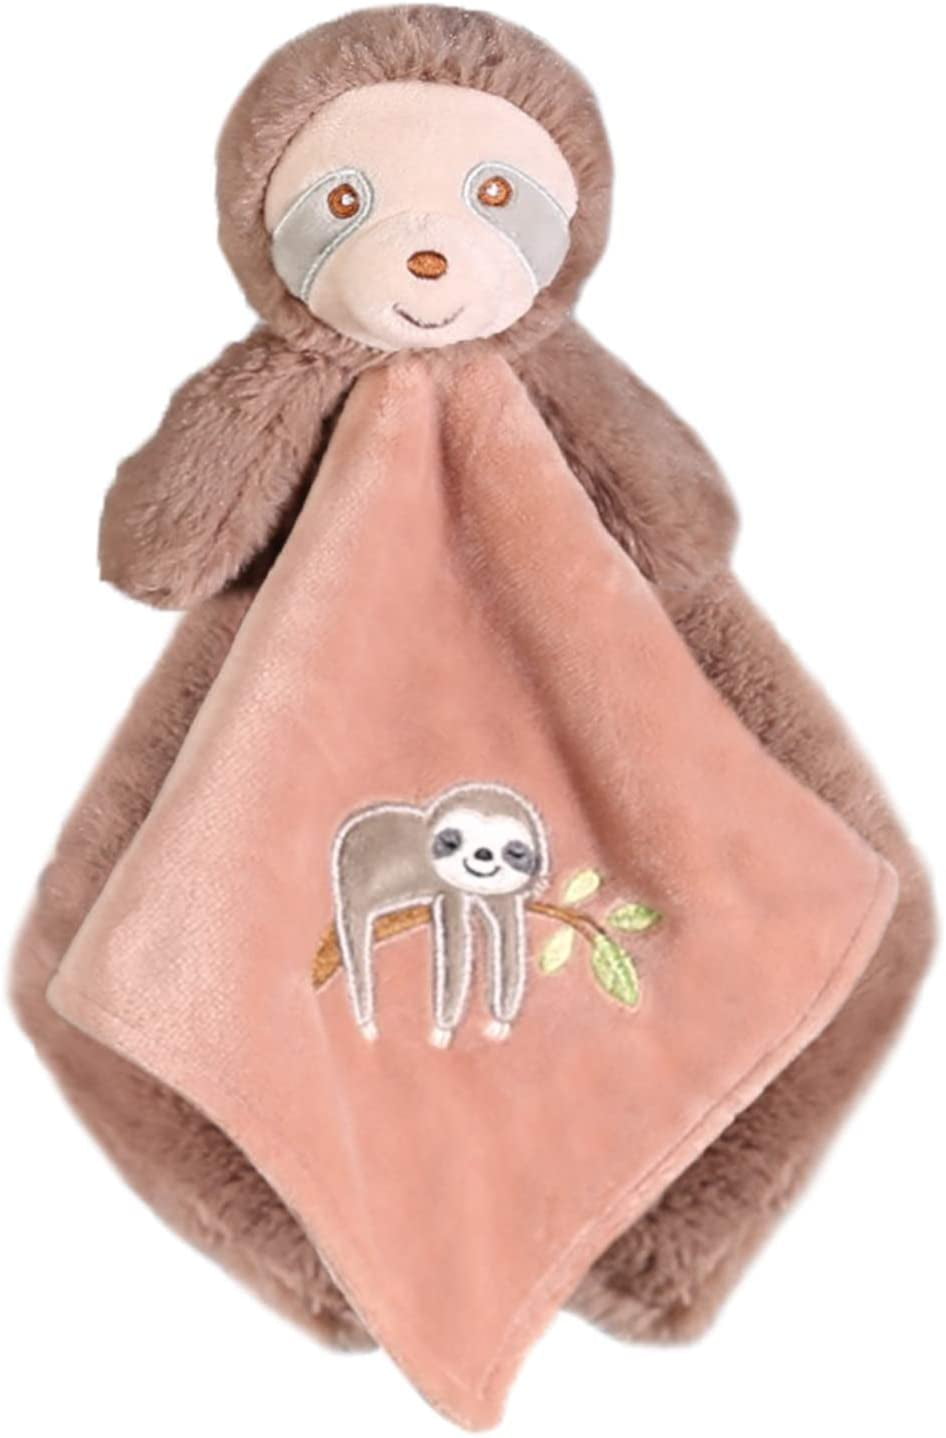 Baby Snuggle Blanket Sloth Lovey Plush Toy